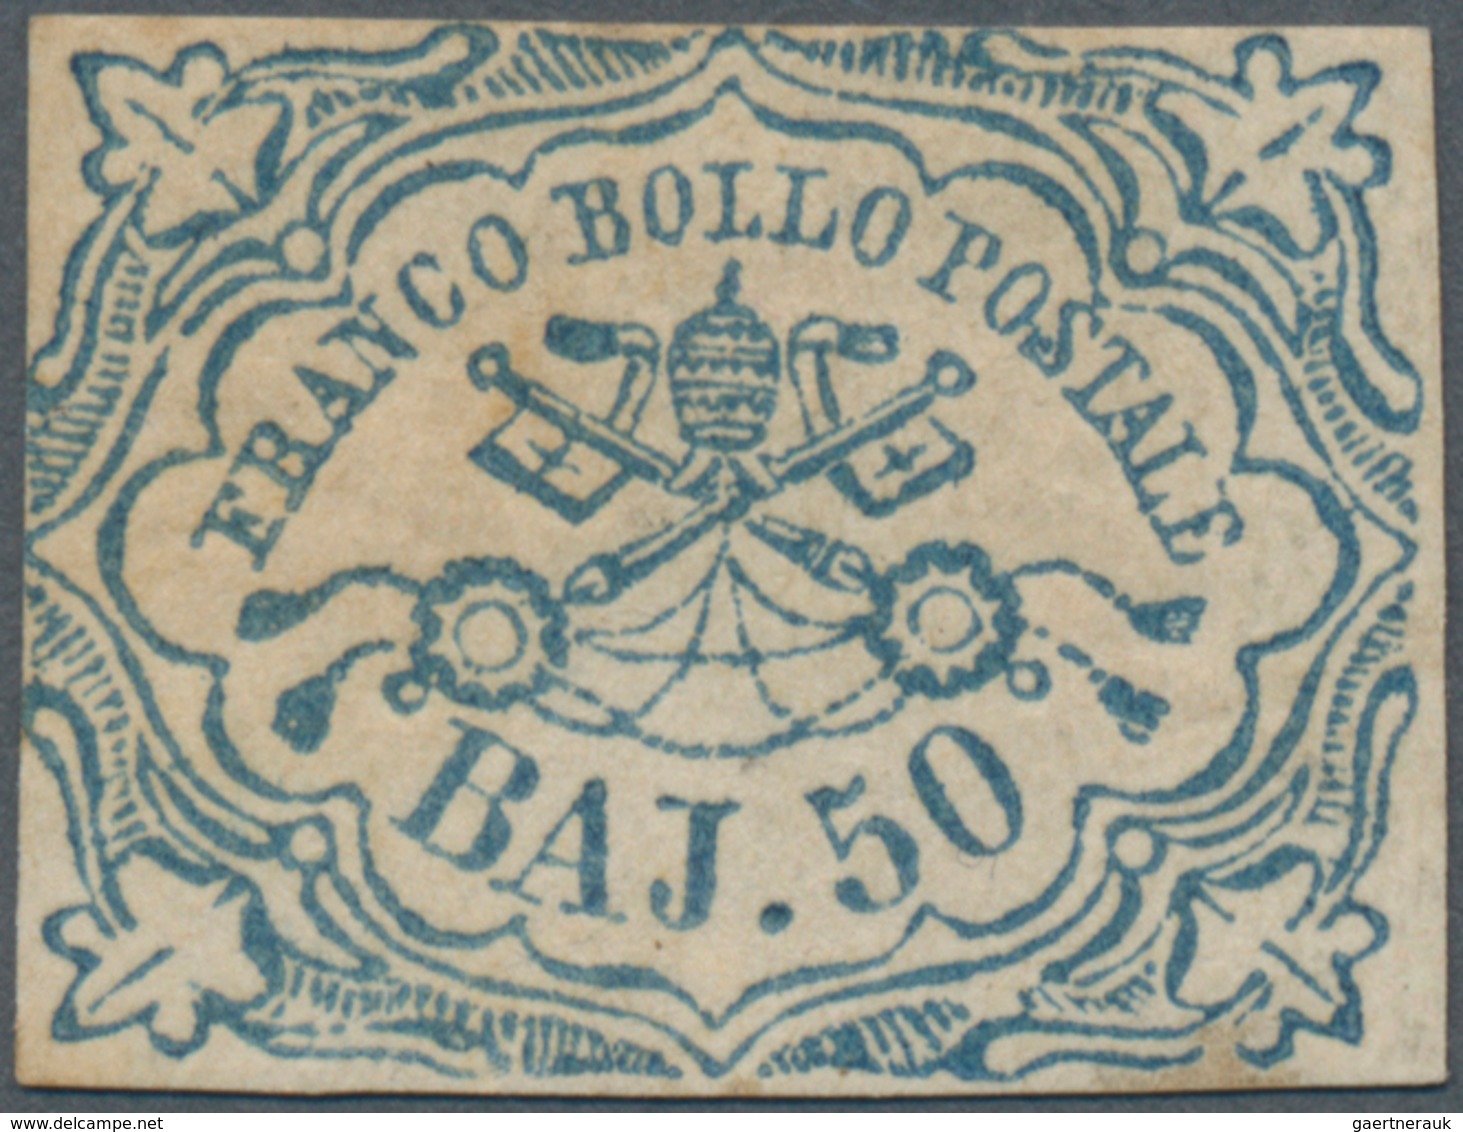 Italien - Altitalienische Staaten: Kirchenstaat: 1852, 50 Baj Blue Mint With Original Gum (browned) - Papal States